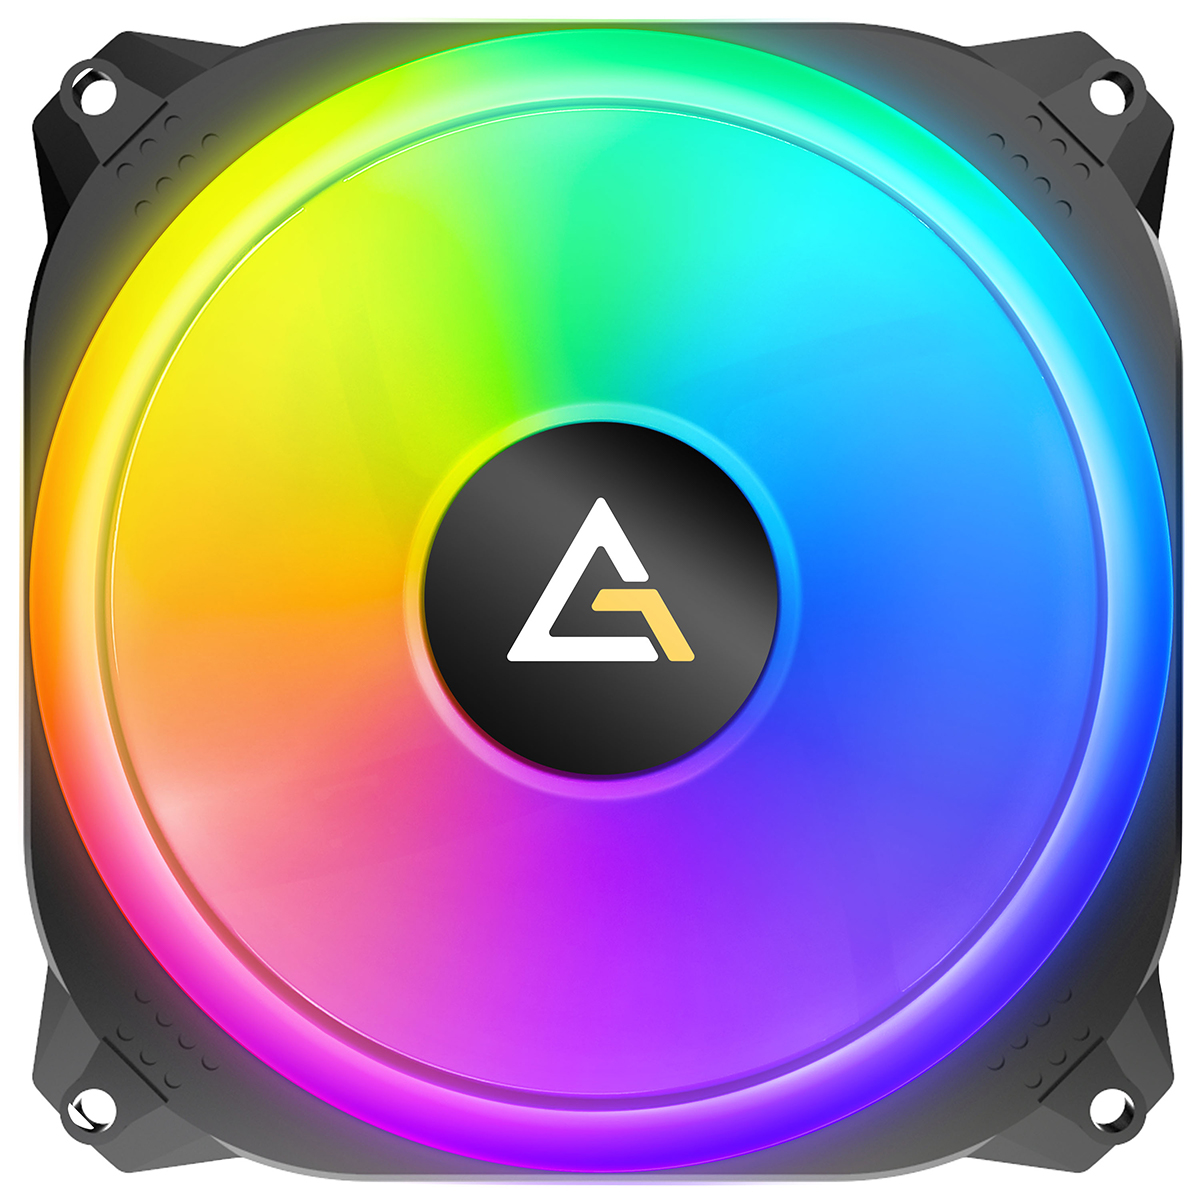 Antec、デュアルリングデザインを採用したアドレッサブルRGBファン「Prizm X 120 ARGB 3+C」発売 | 株式会社リンクス